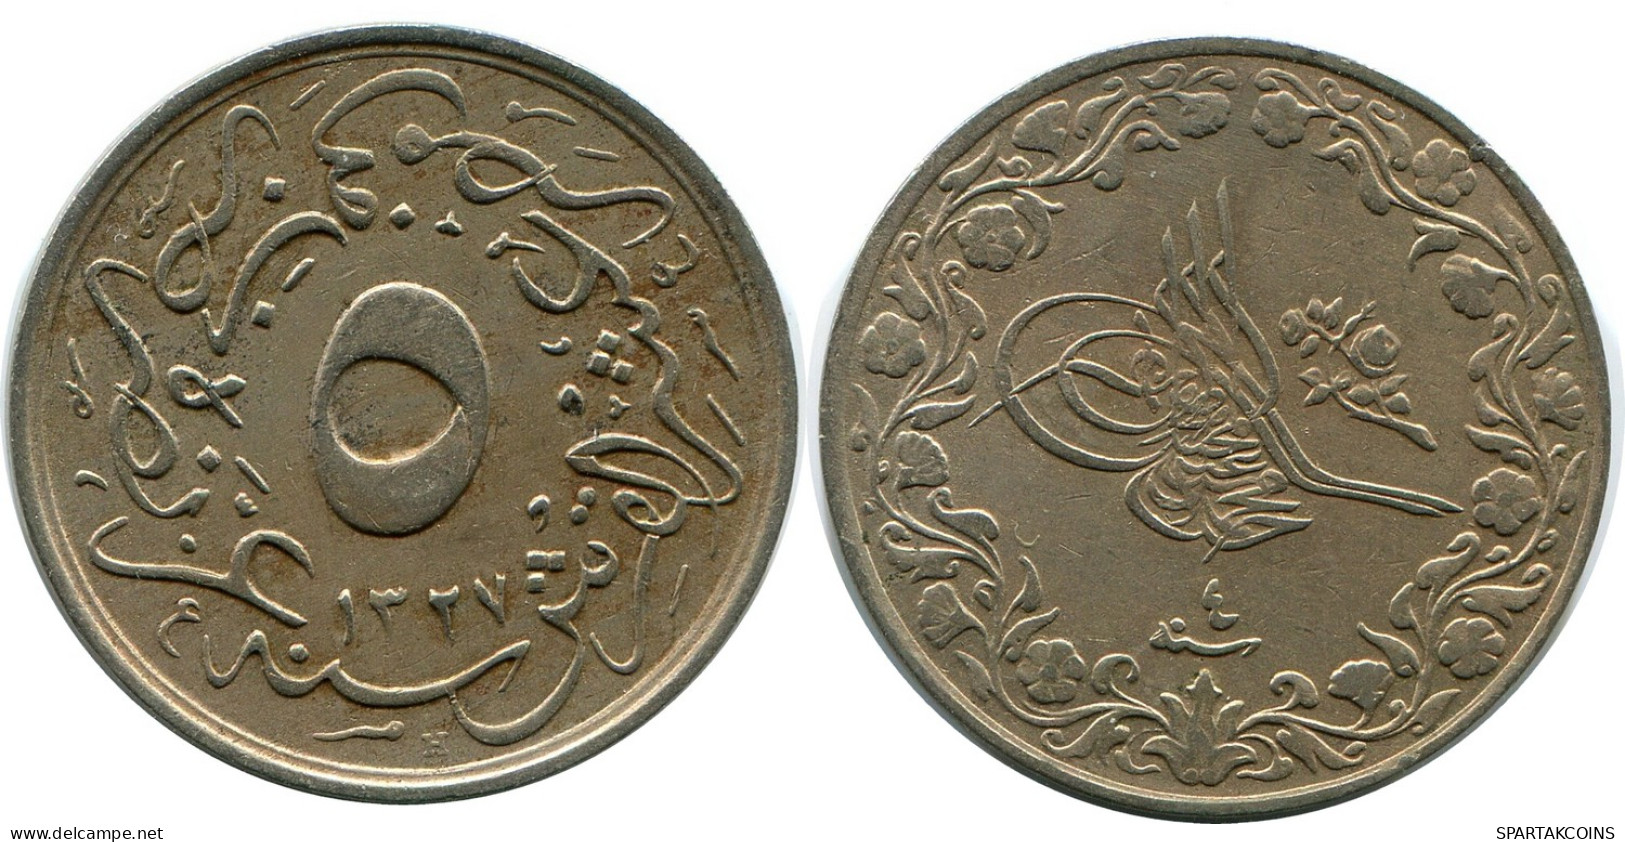 5/10 QIRSH 1911 EGYPT Islamic Coin #AH282.10.U - Egypt